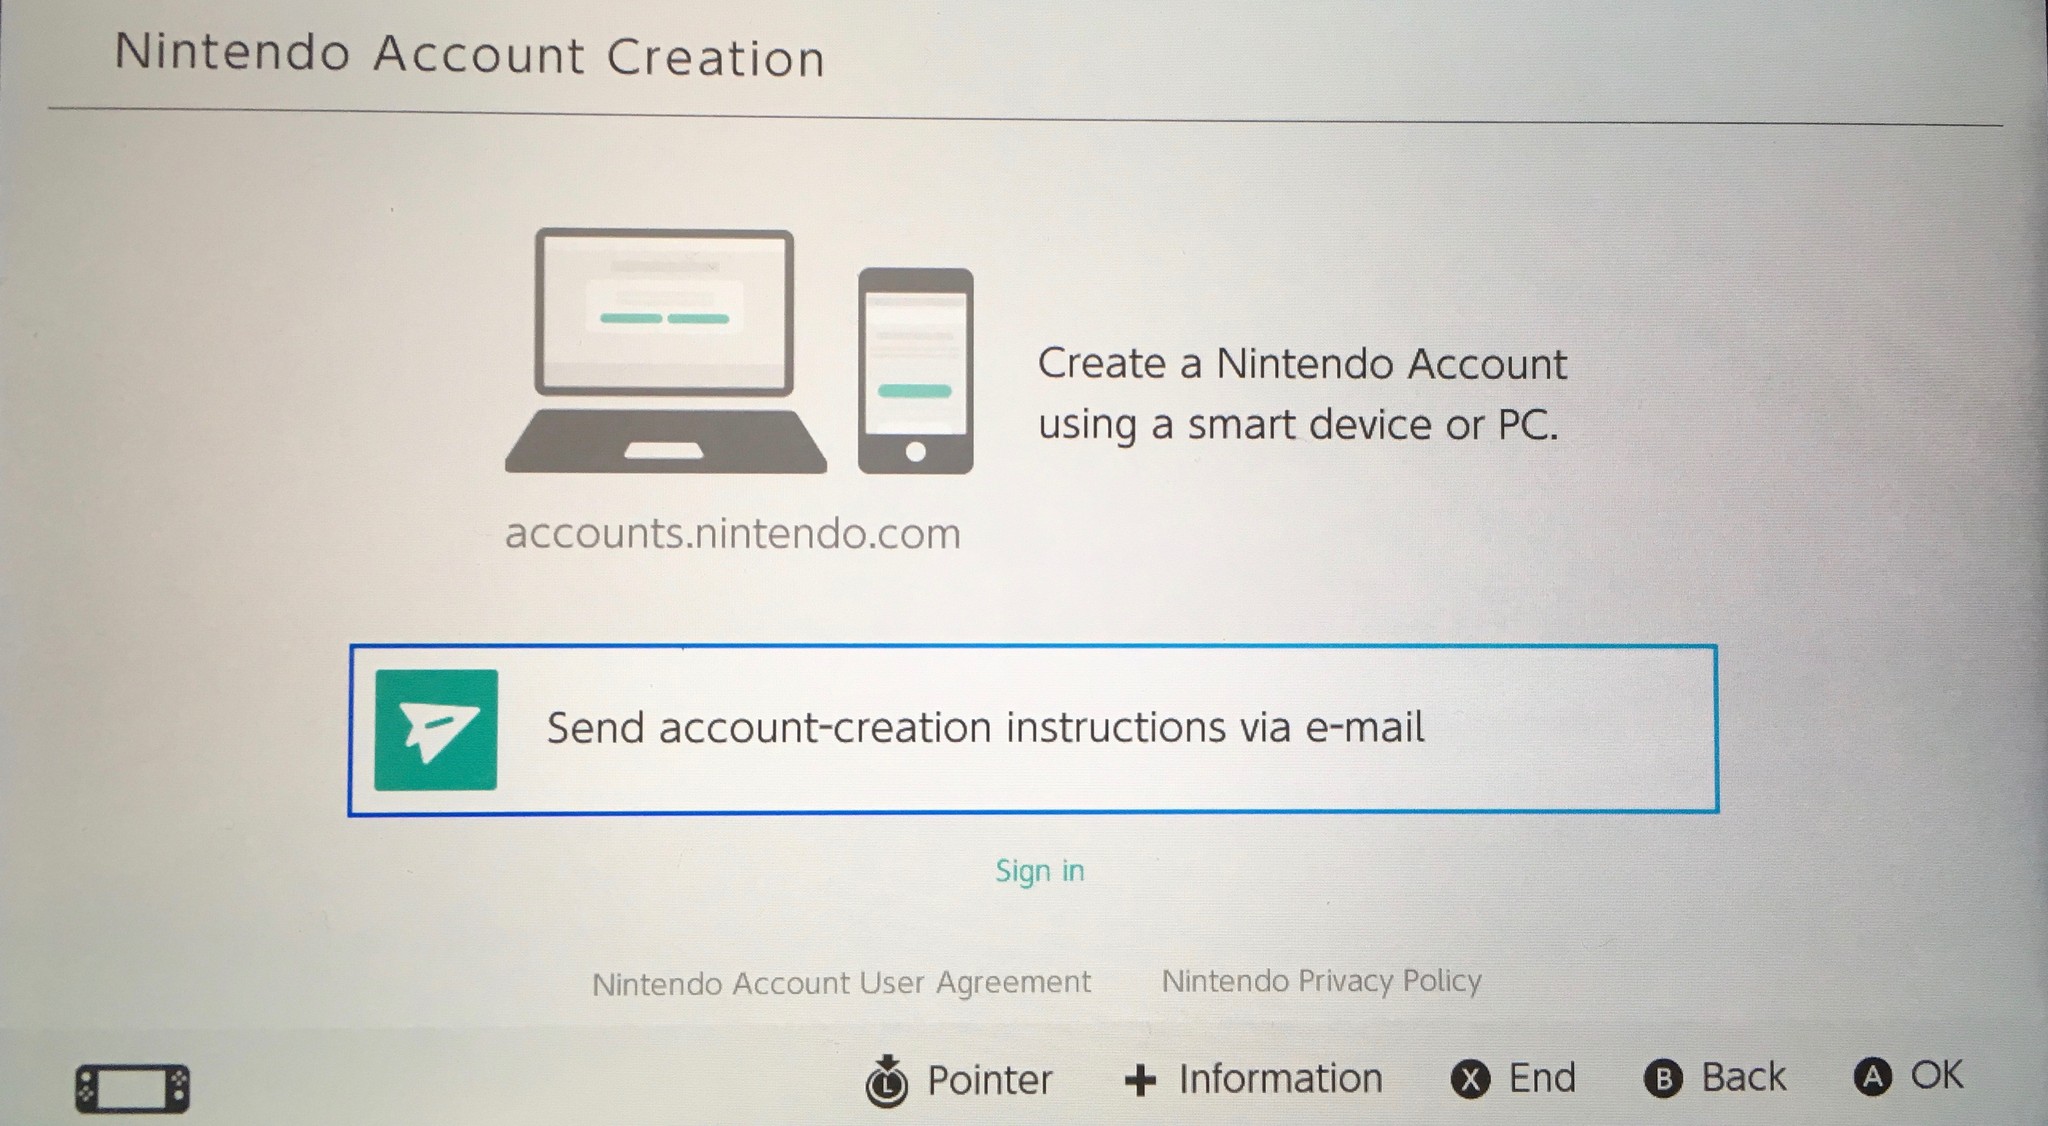 Select Send account information instructions via e-mail